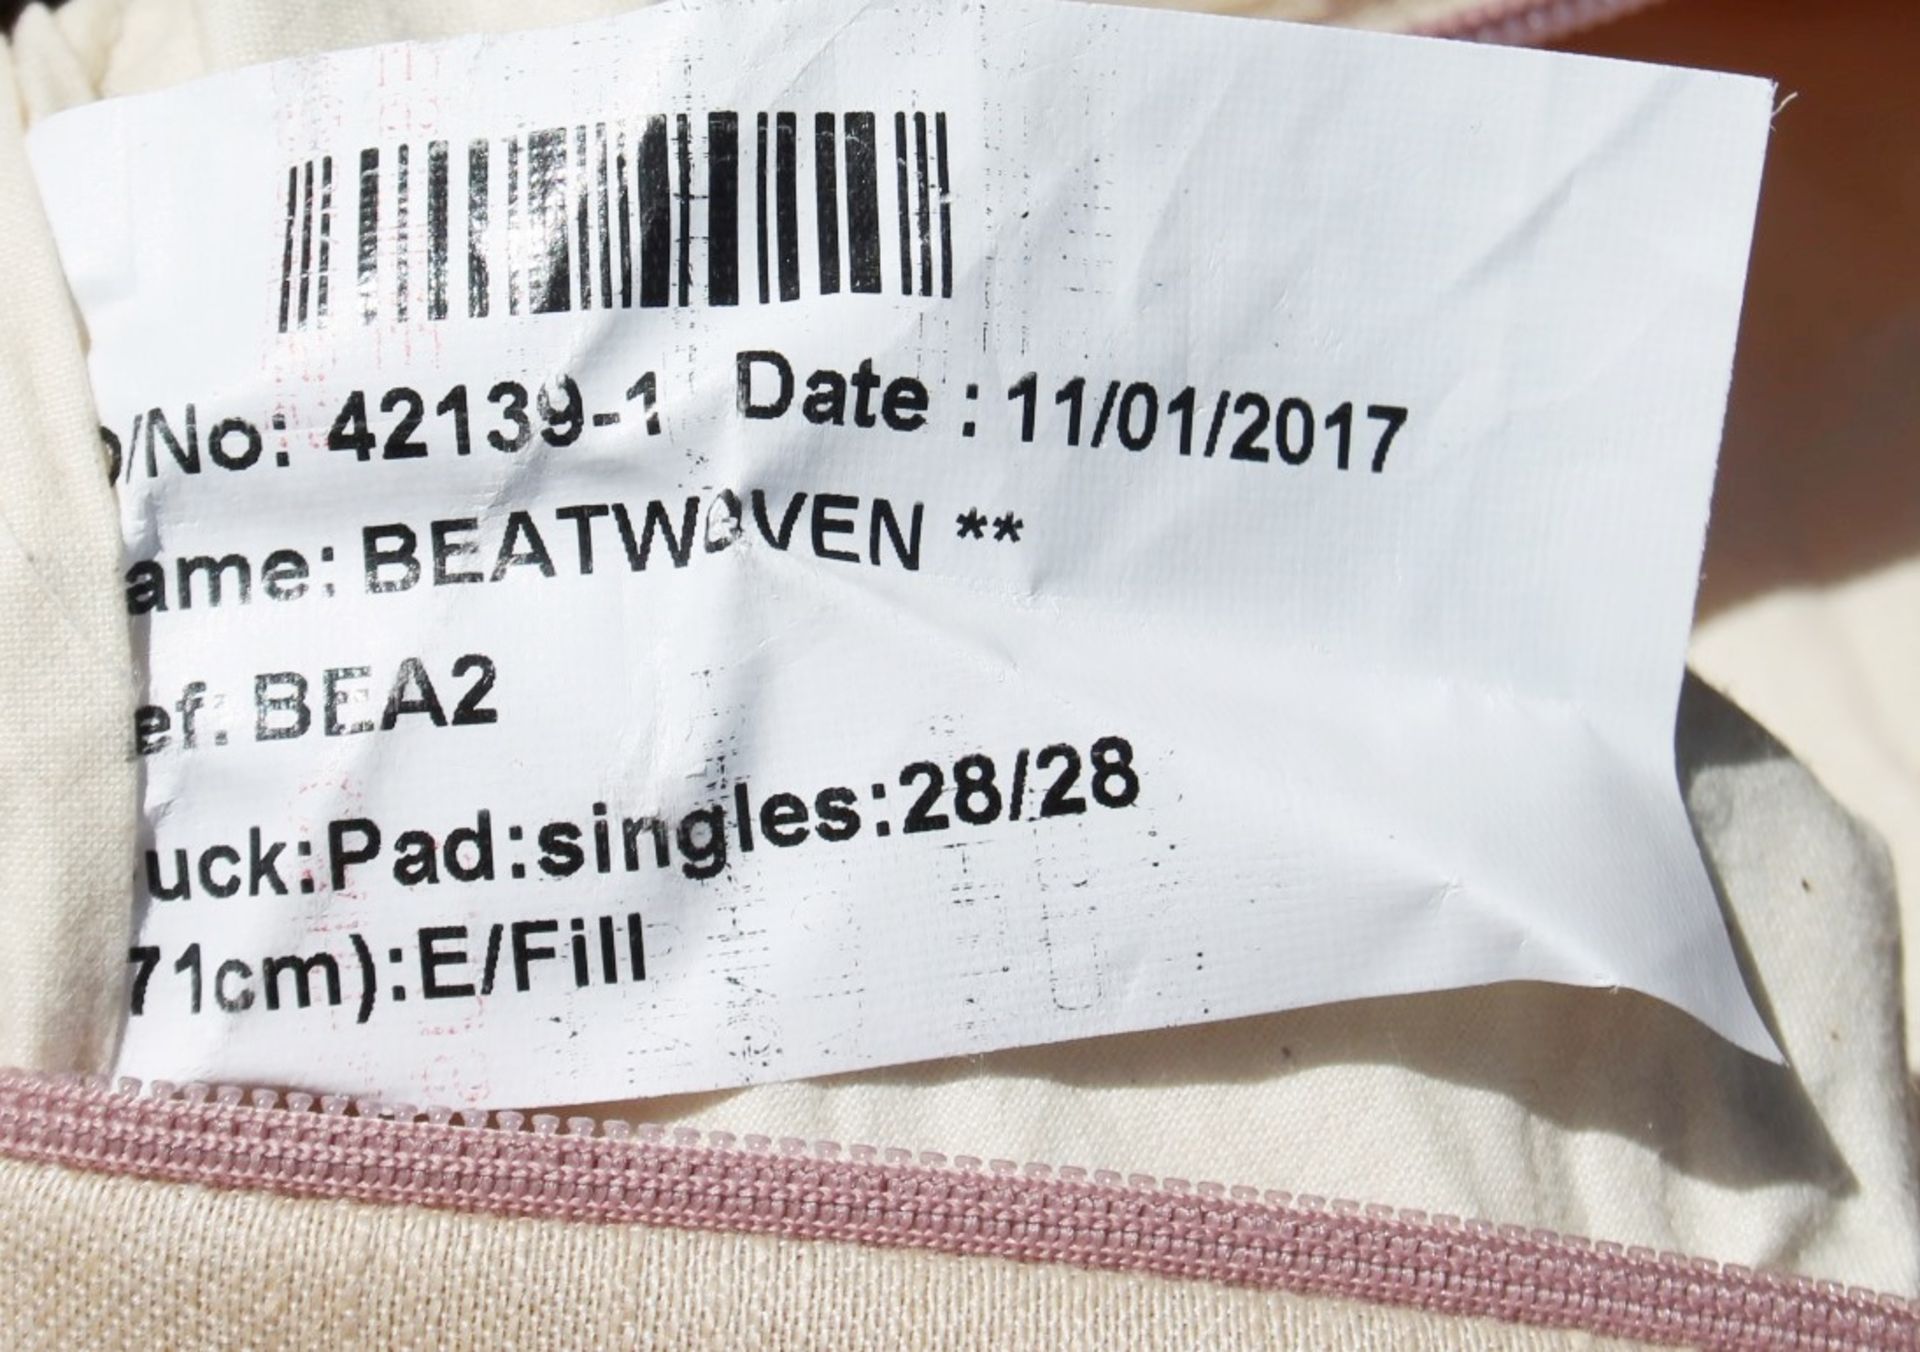 1 x BEATWOVEN 'Adage' Designer Large Weaved Silk Cushion - Original Price £295.00 - Ref: 5536778/ - Image 6 of 6